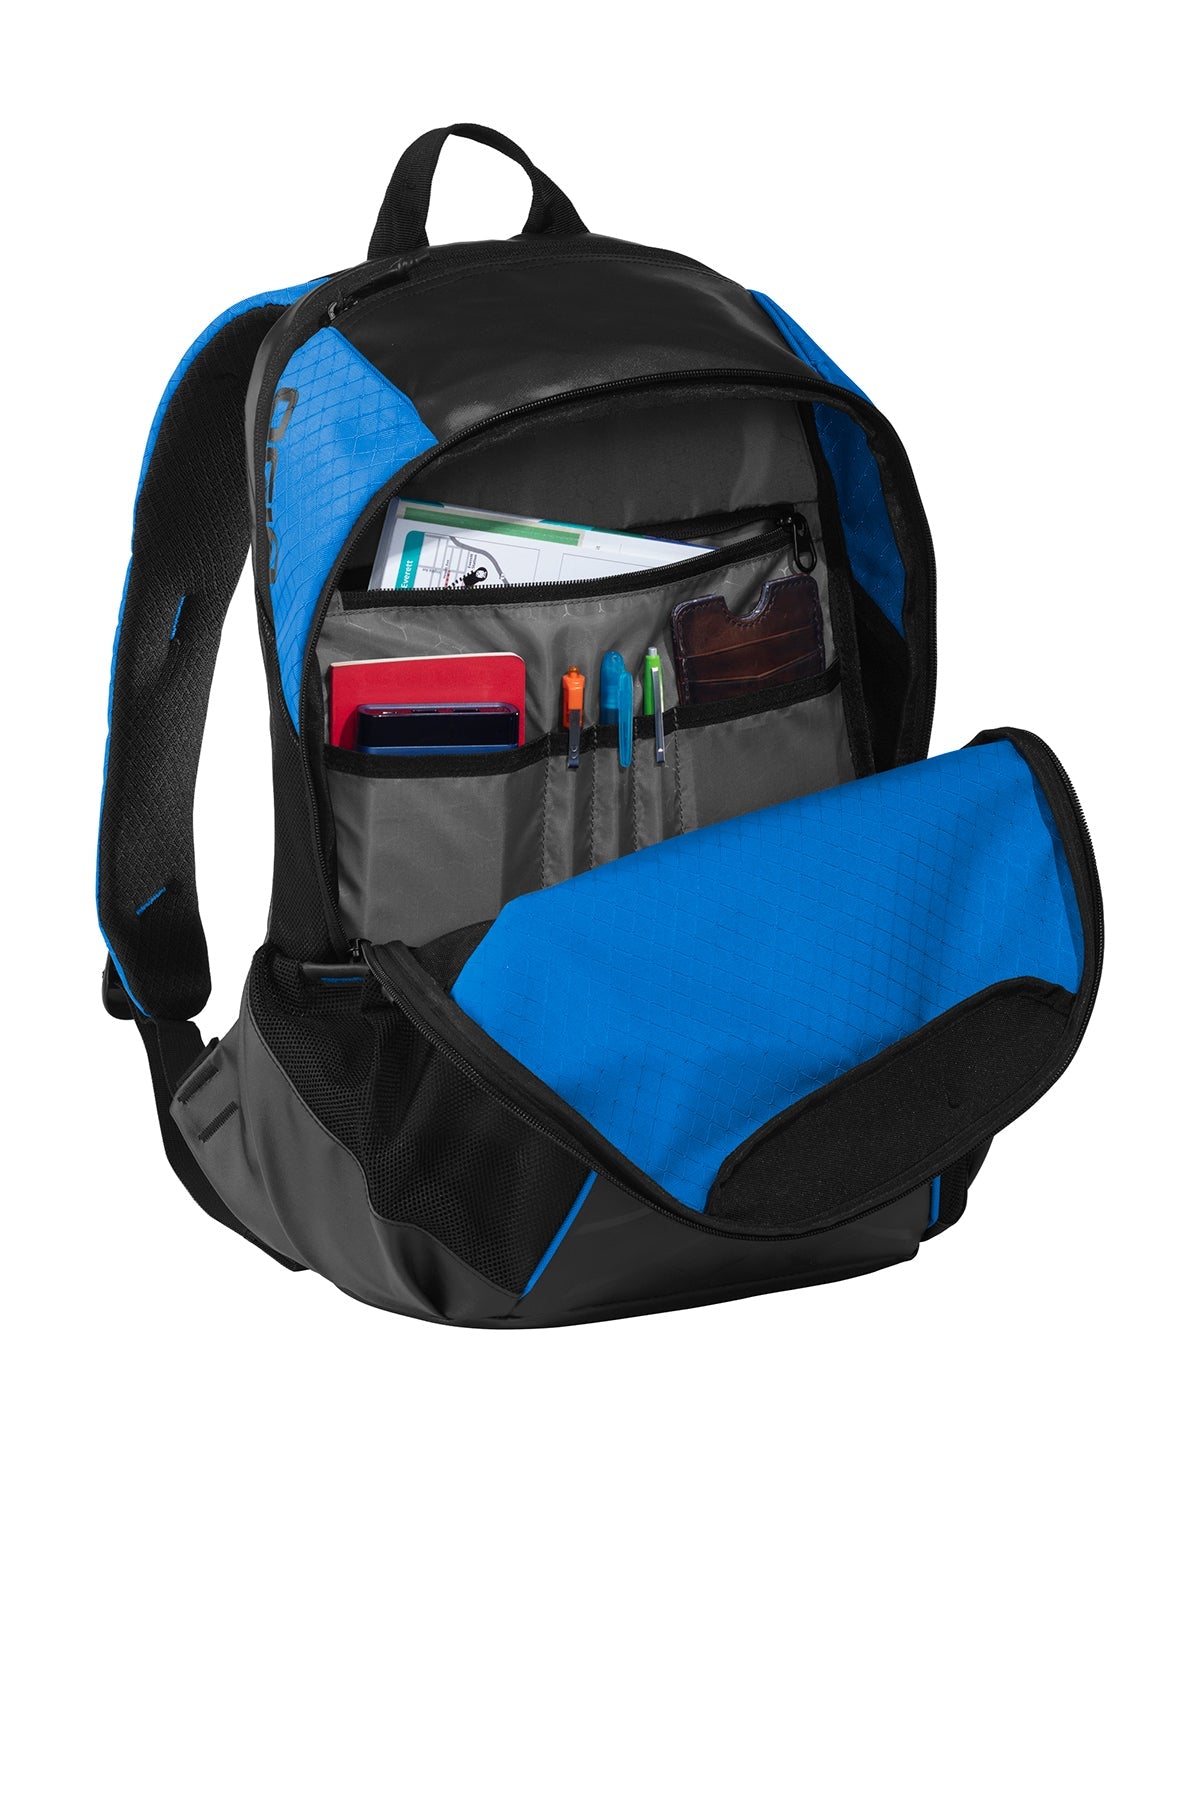 OGIO Basis Customzied Backpacks, Cobalt Blue